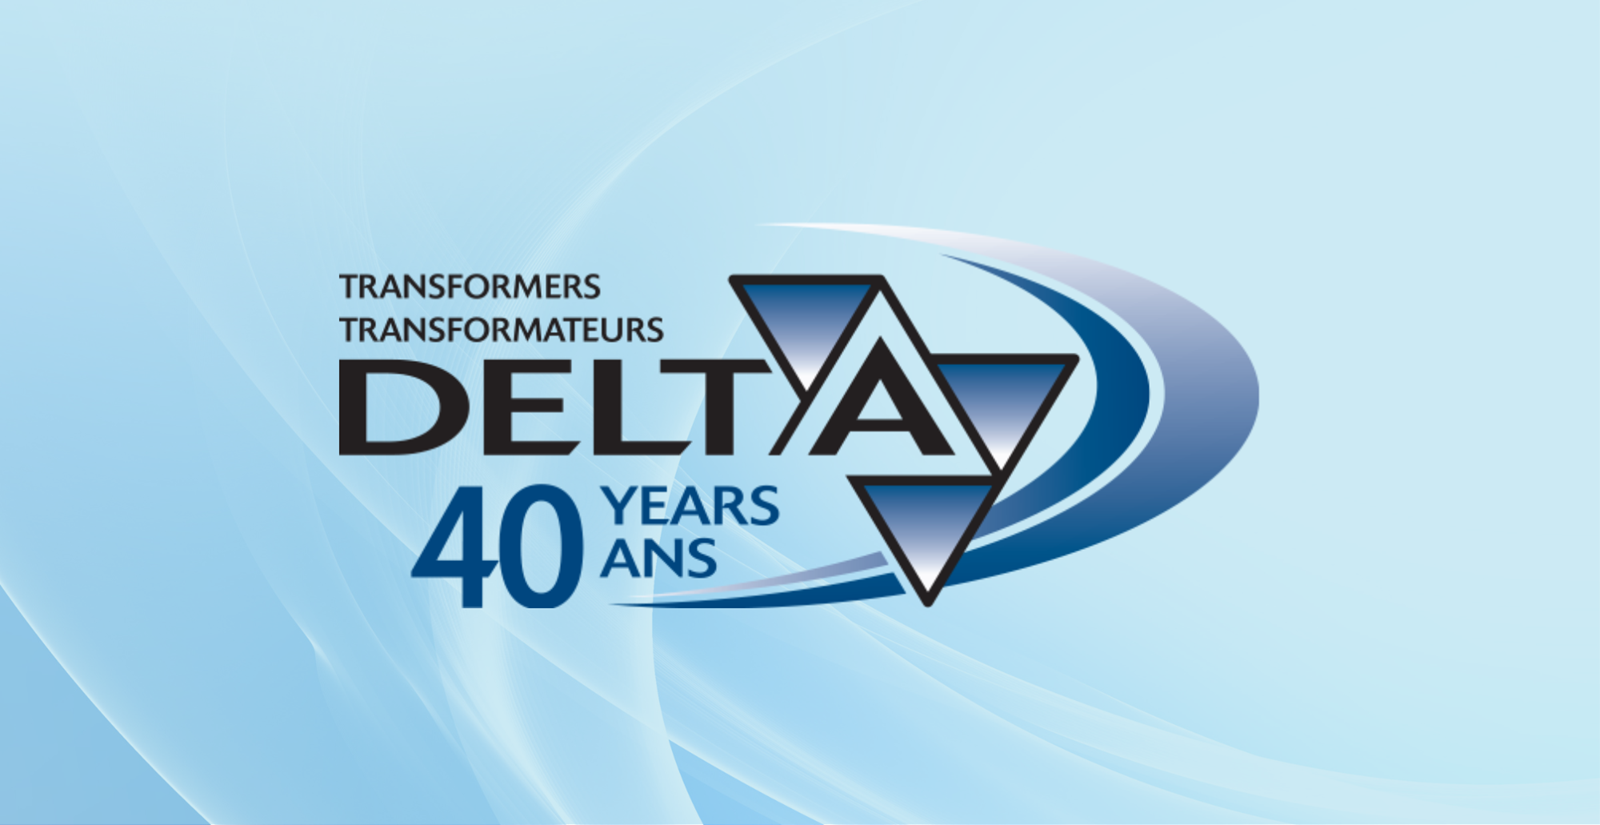 Delta 40 year anniversary logo on blue background